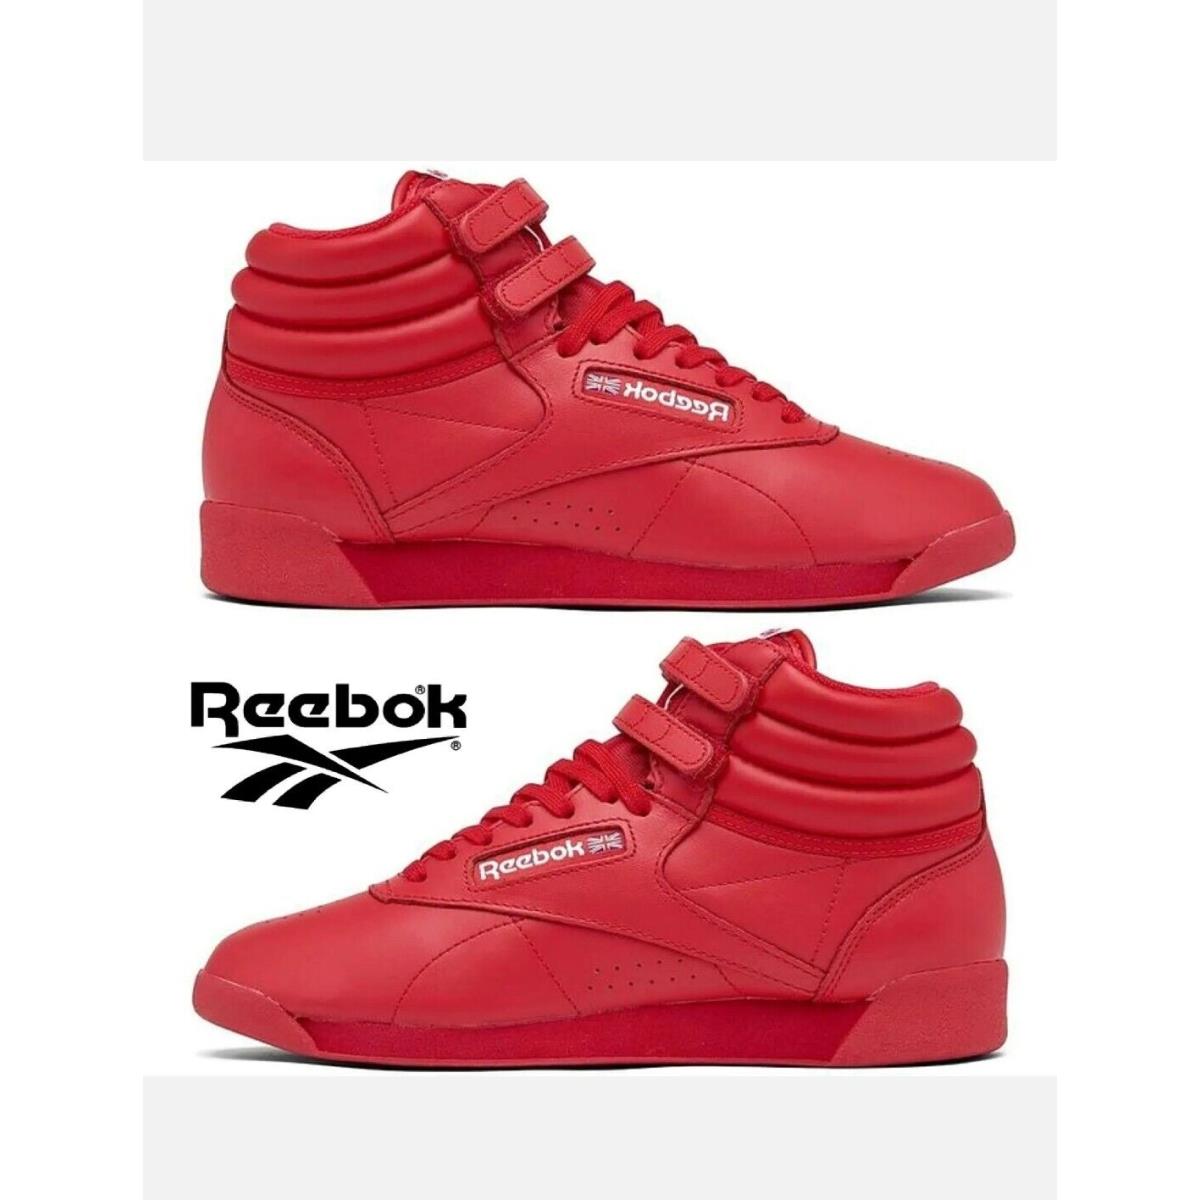 Reebok Freestyle Hi 5411 Ltd Women Casual Retro Shoe Red - Red